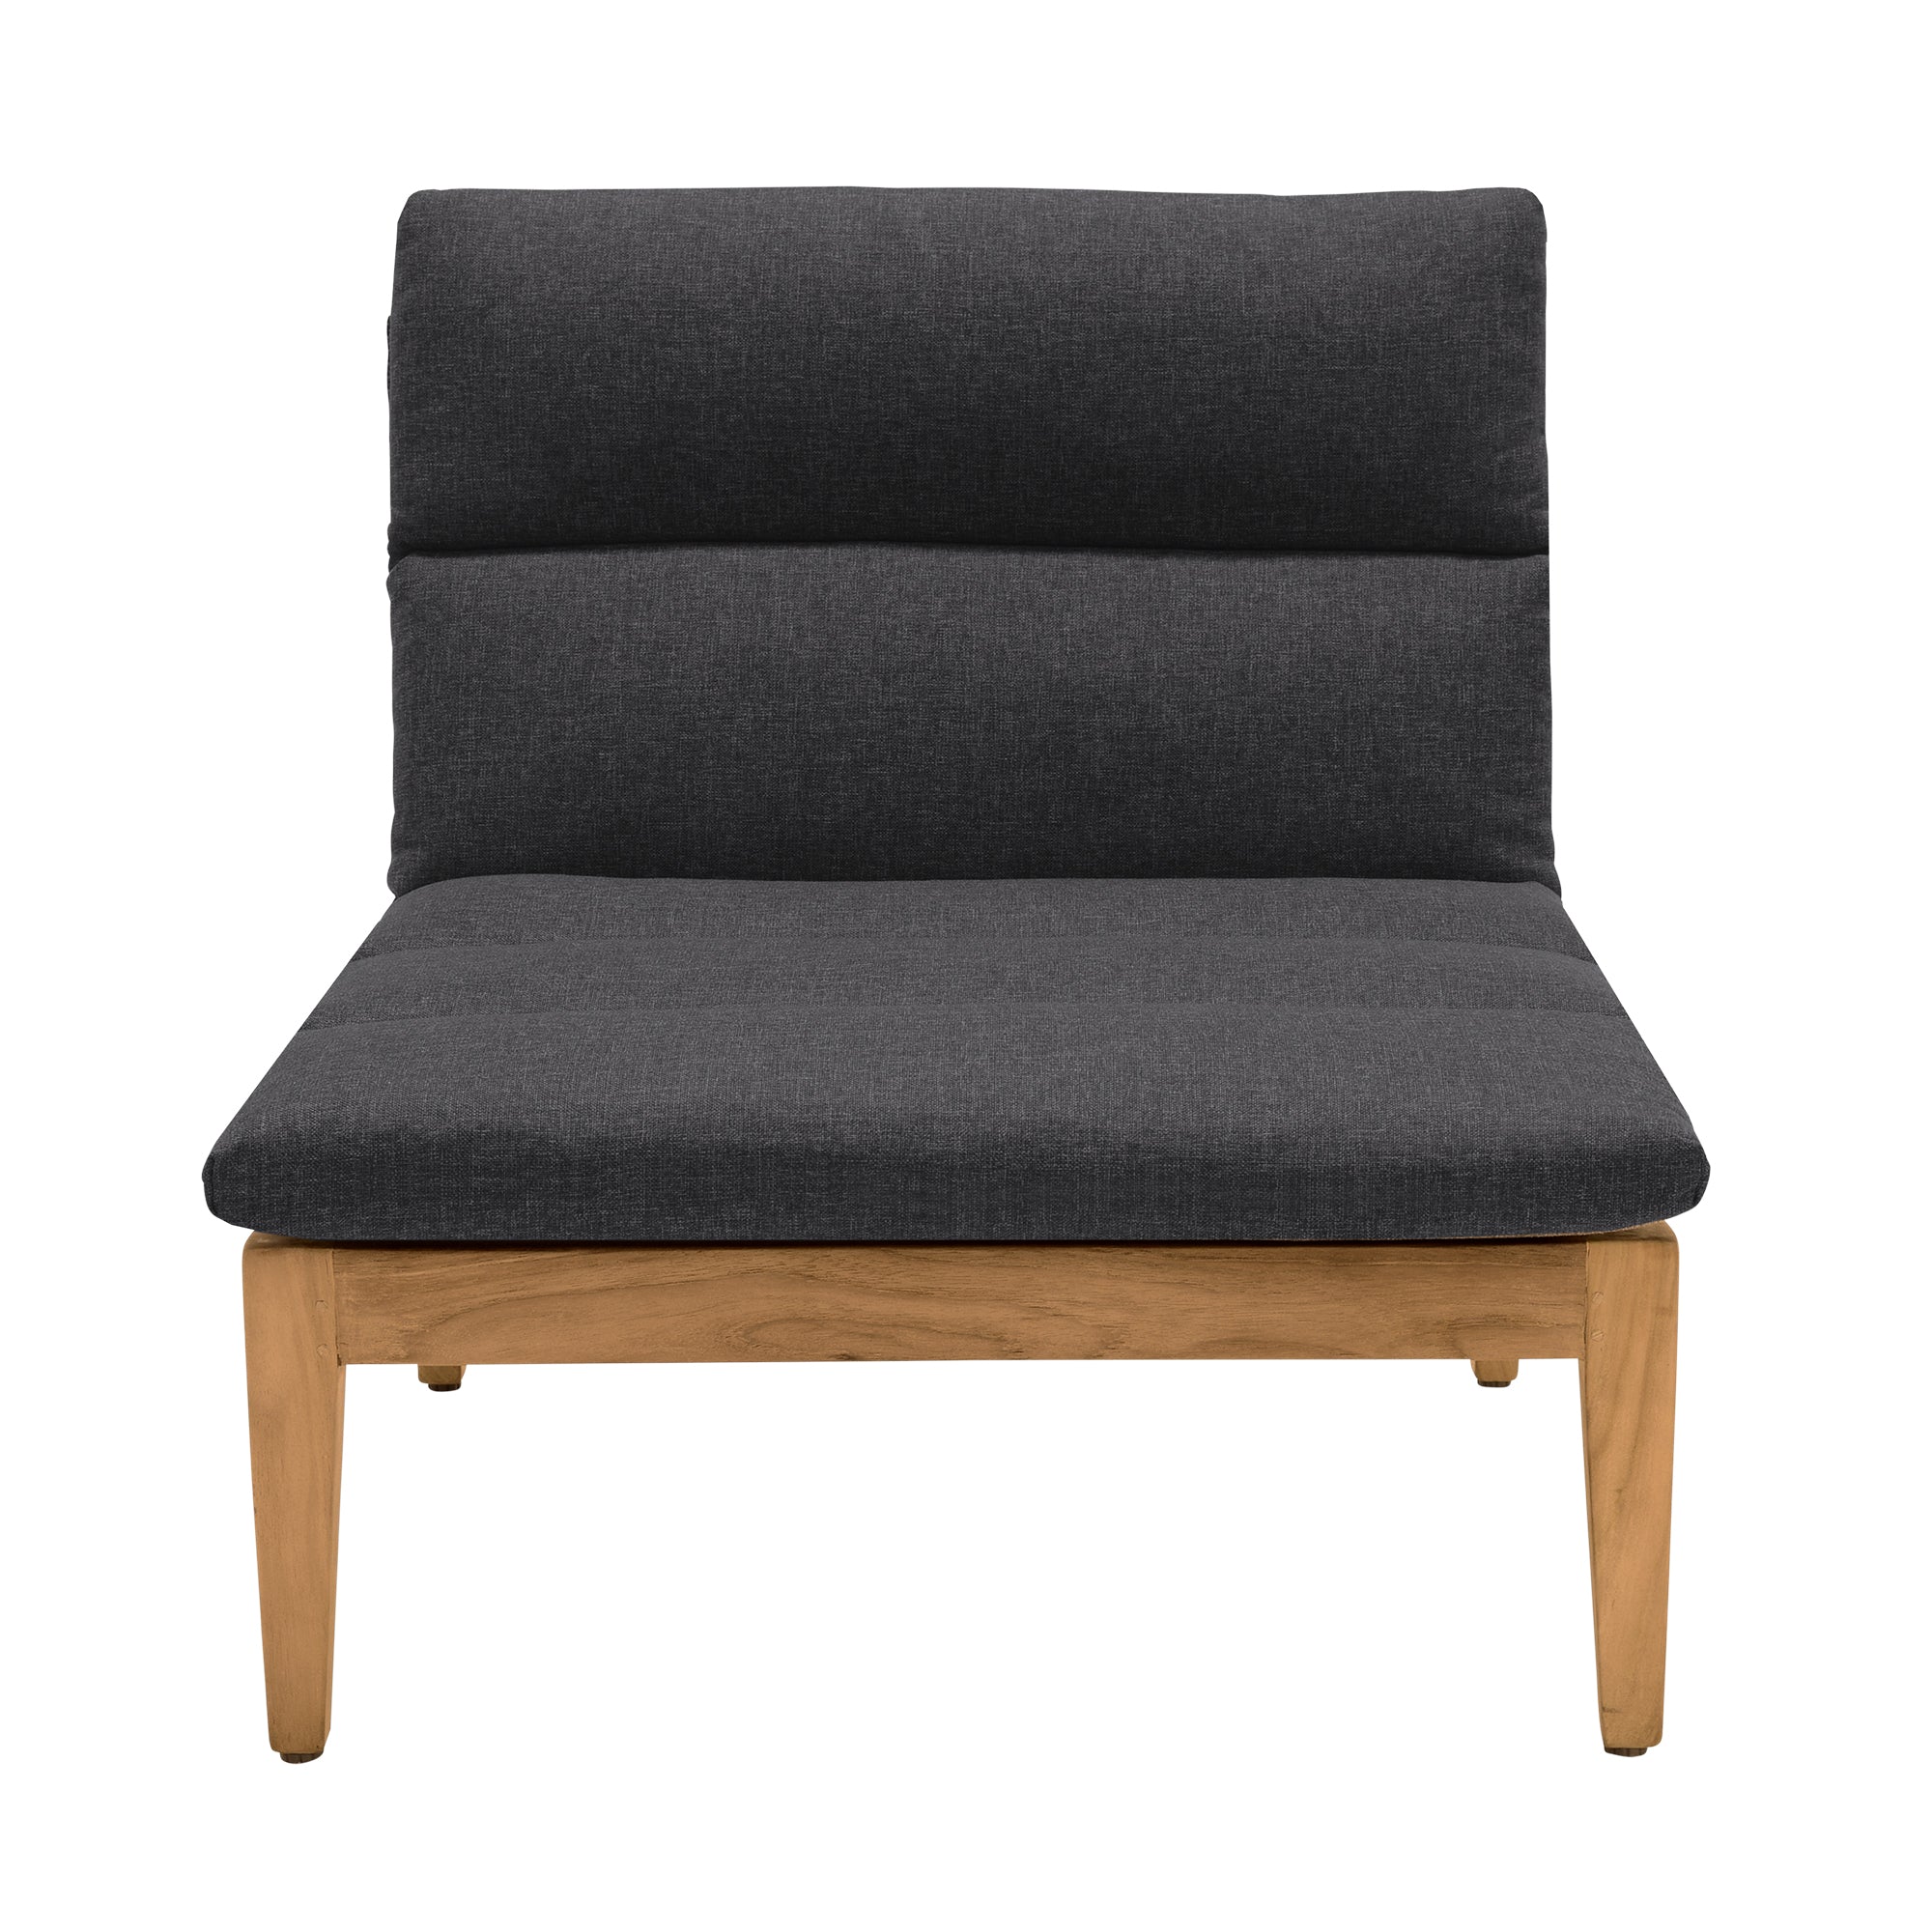 Armen Living - Arno Outdoor Modular Teak Wood Lounge Chair in Olefin - Set of 2 - LCARCHDK2PC